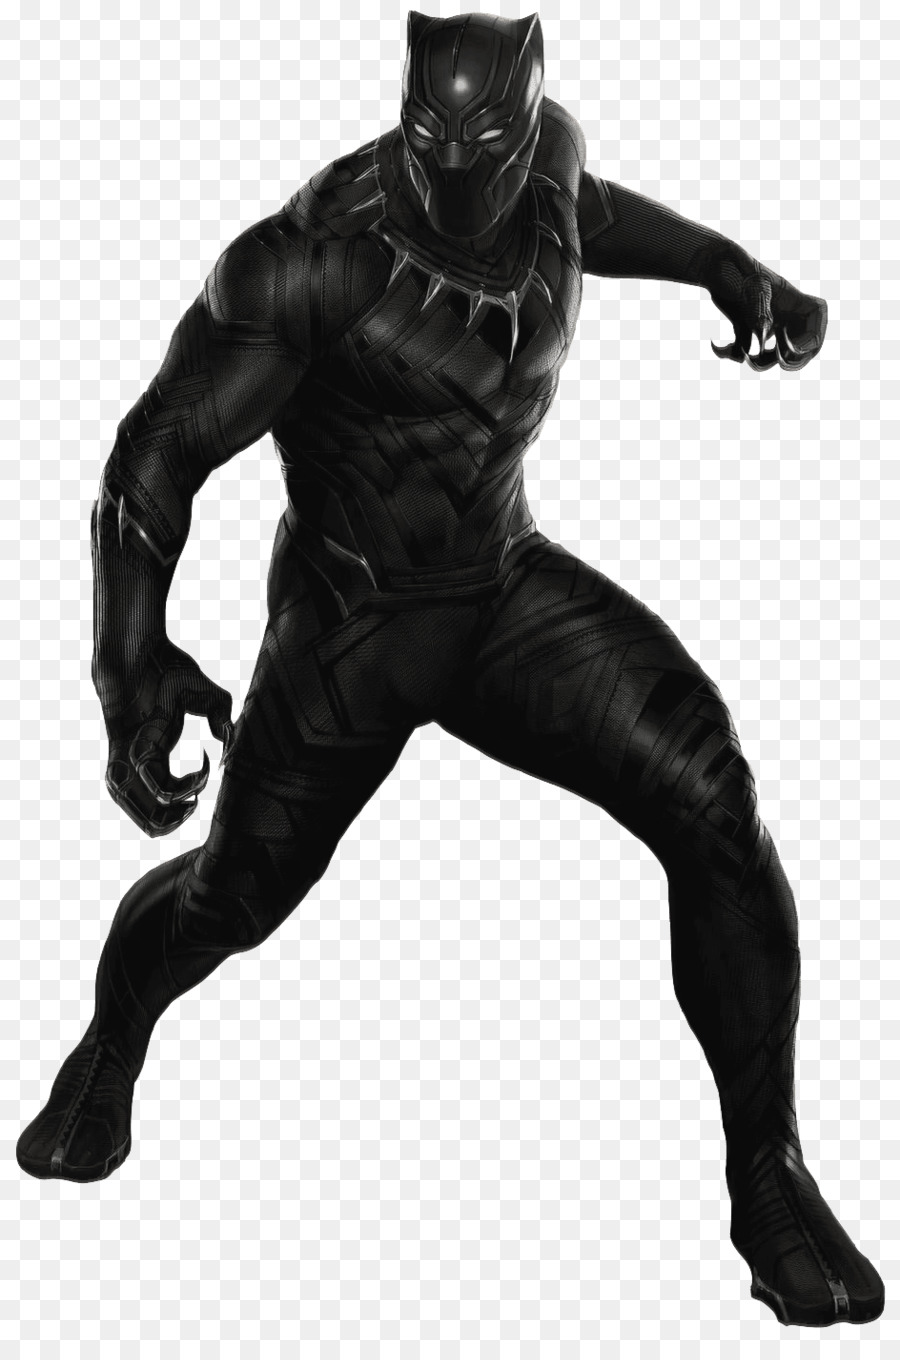 Black Panther Costume Iron Man Suit Clothing - dreamcatcher png download - 944*1414 - Free Transparent Black Panther png Download.